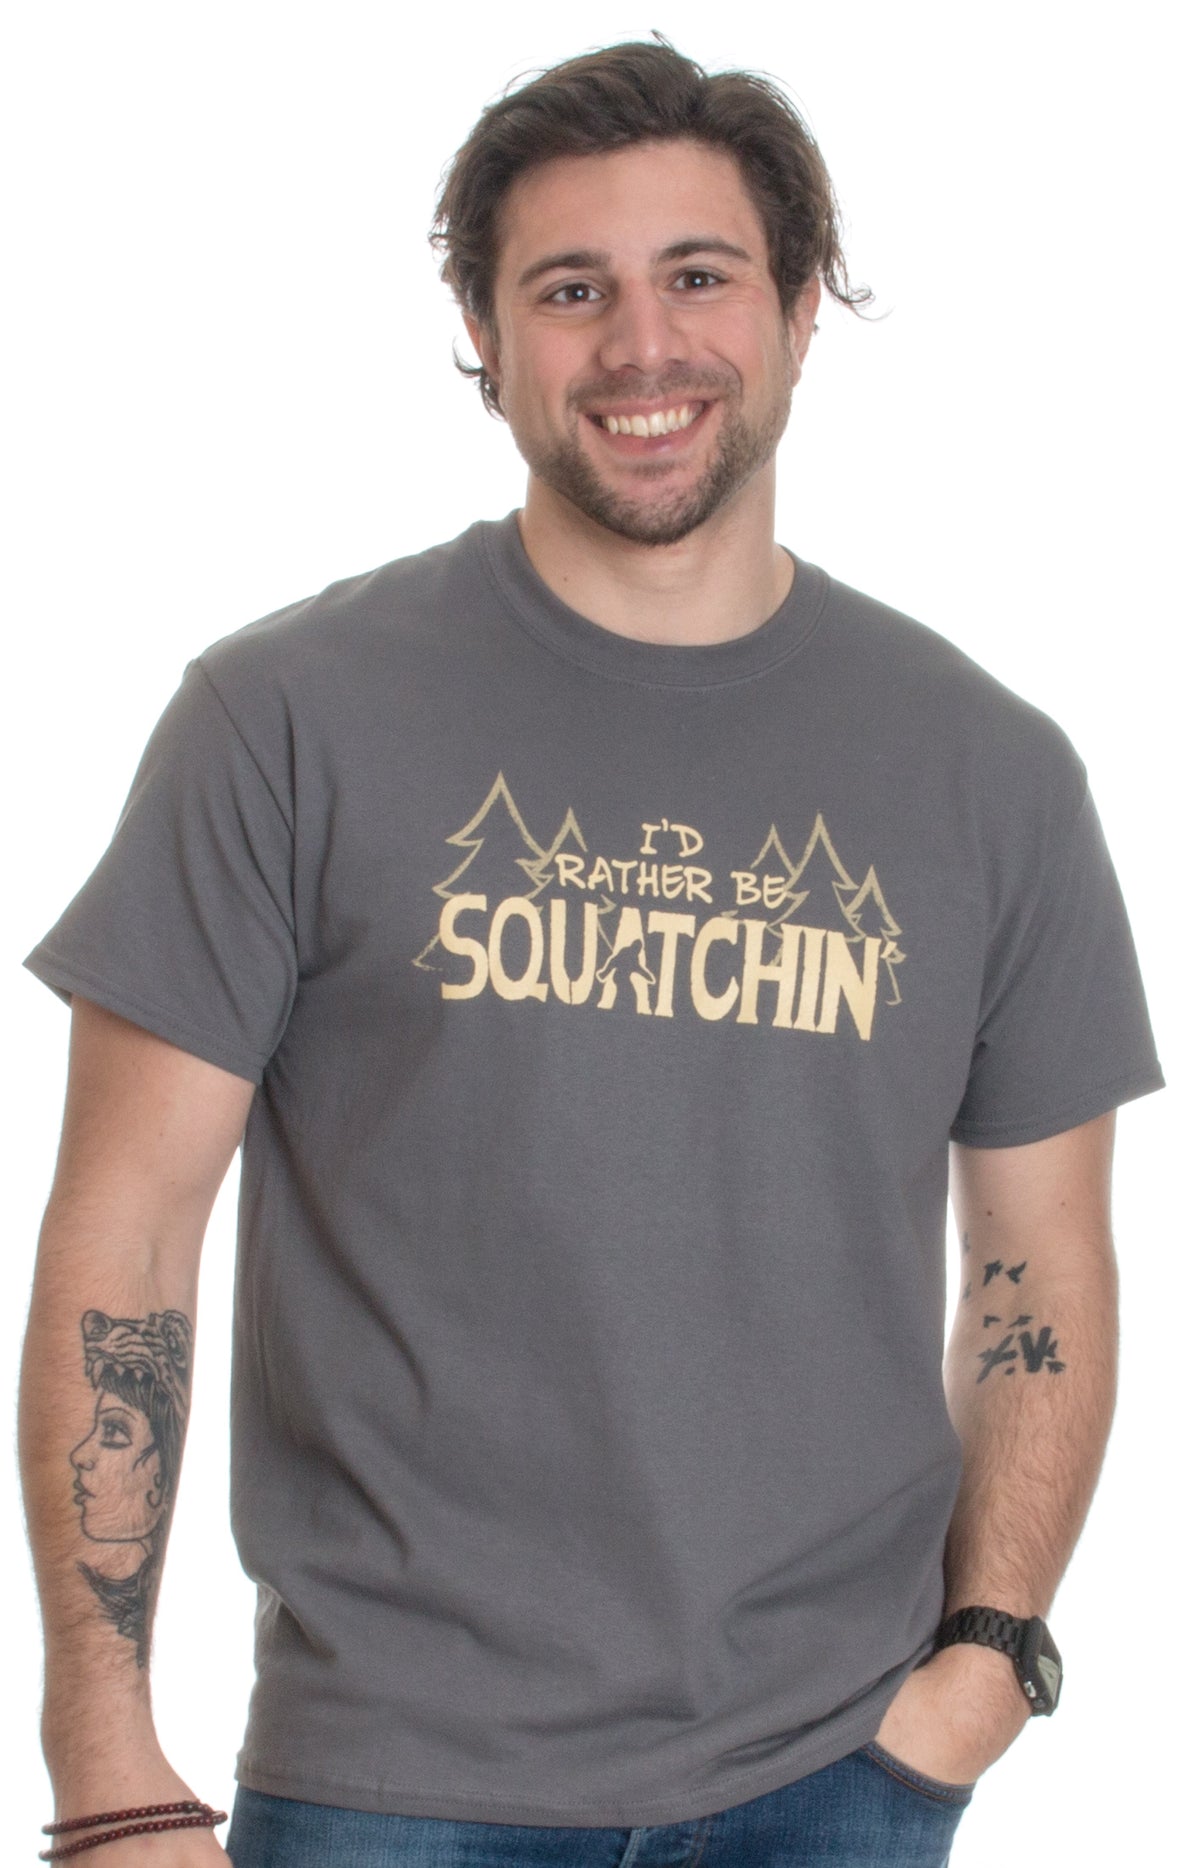 I'd Rather be Squatchin' | Funny Official Gone Bigfoot Sasquatch Hunter T-shirt